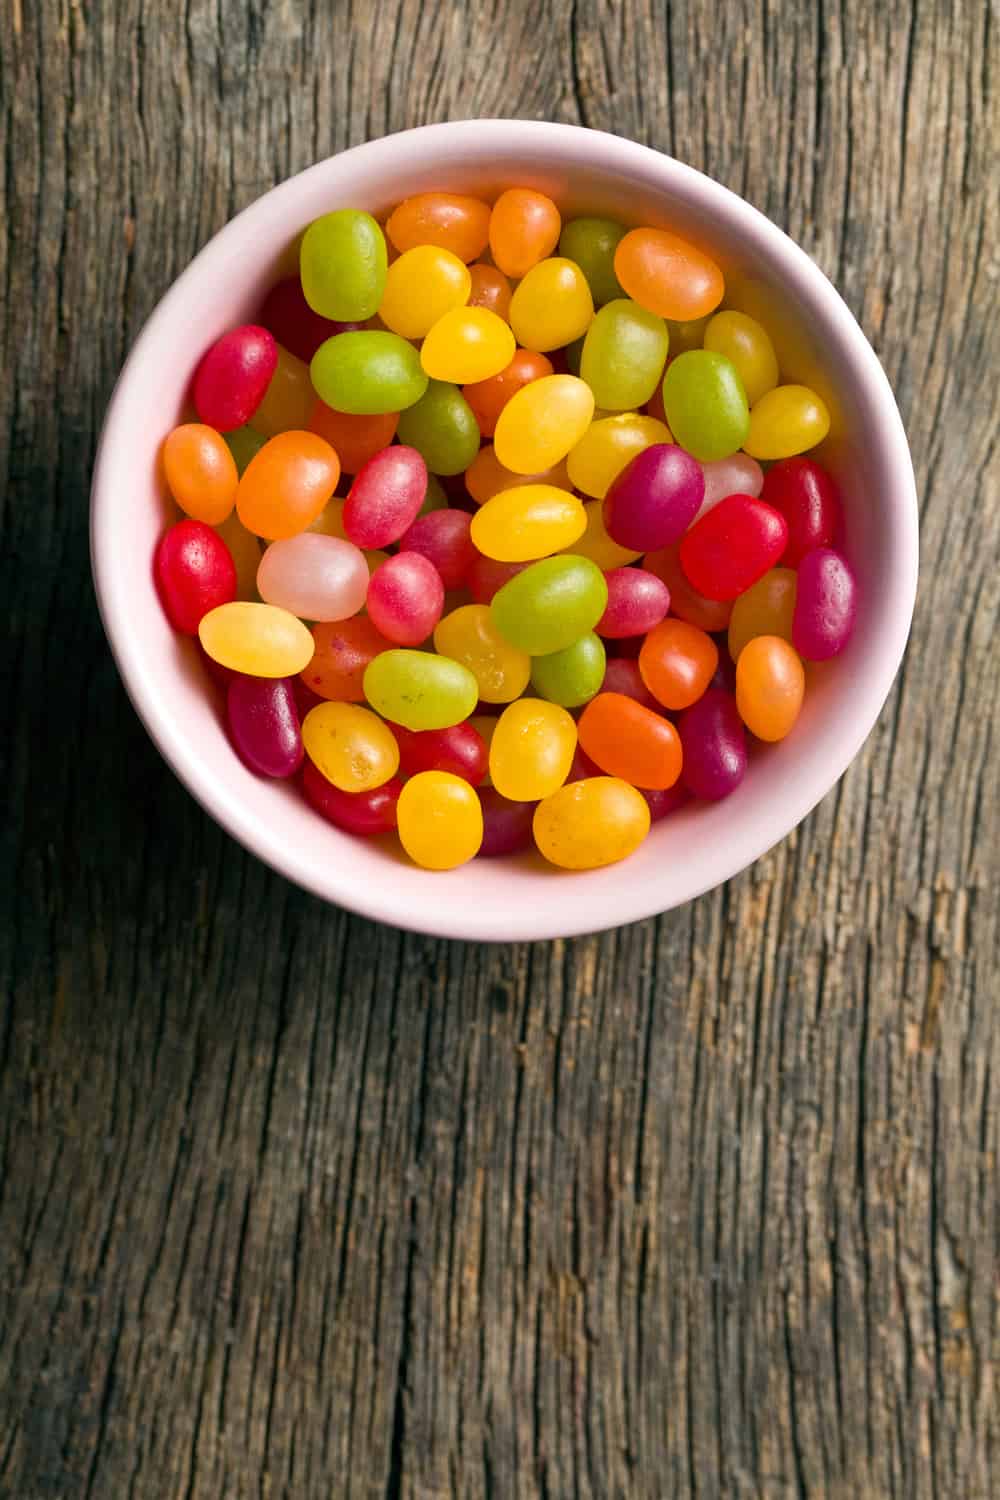 Do Jelly Beans Go Bad